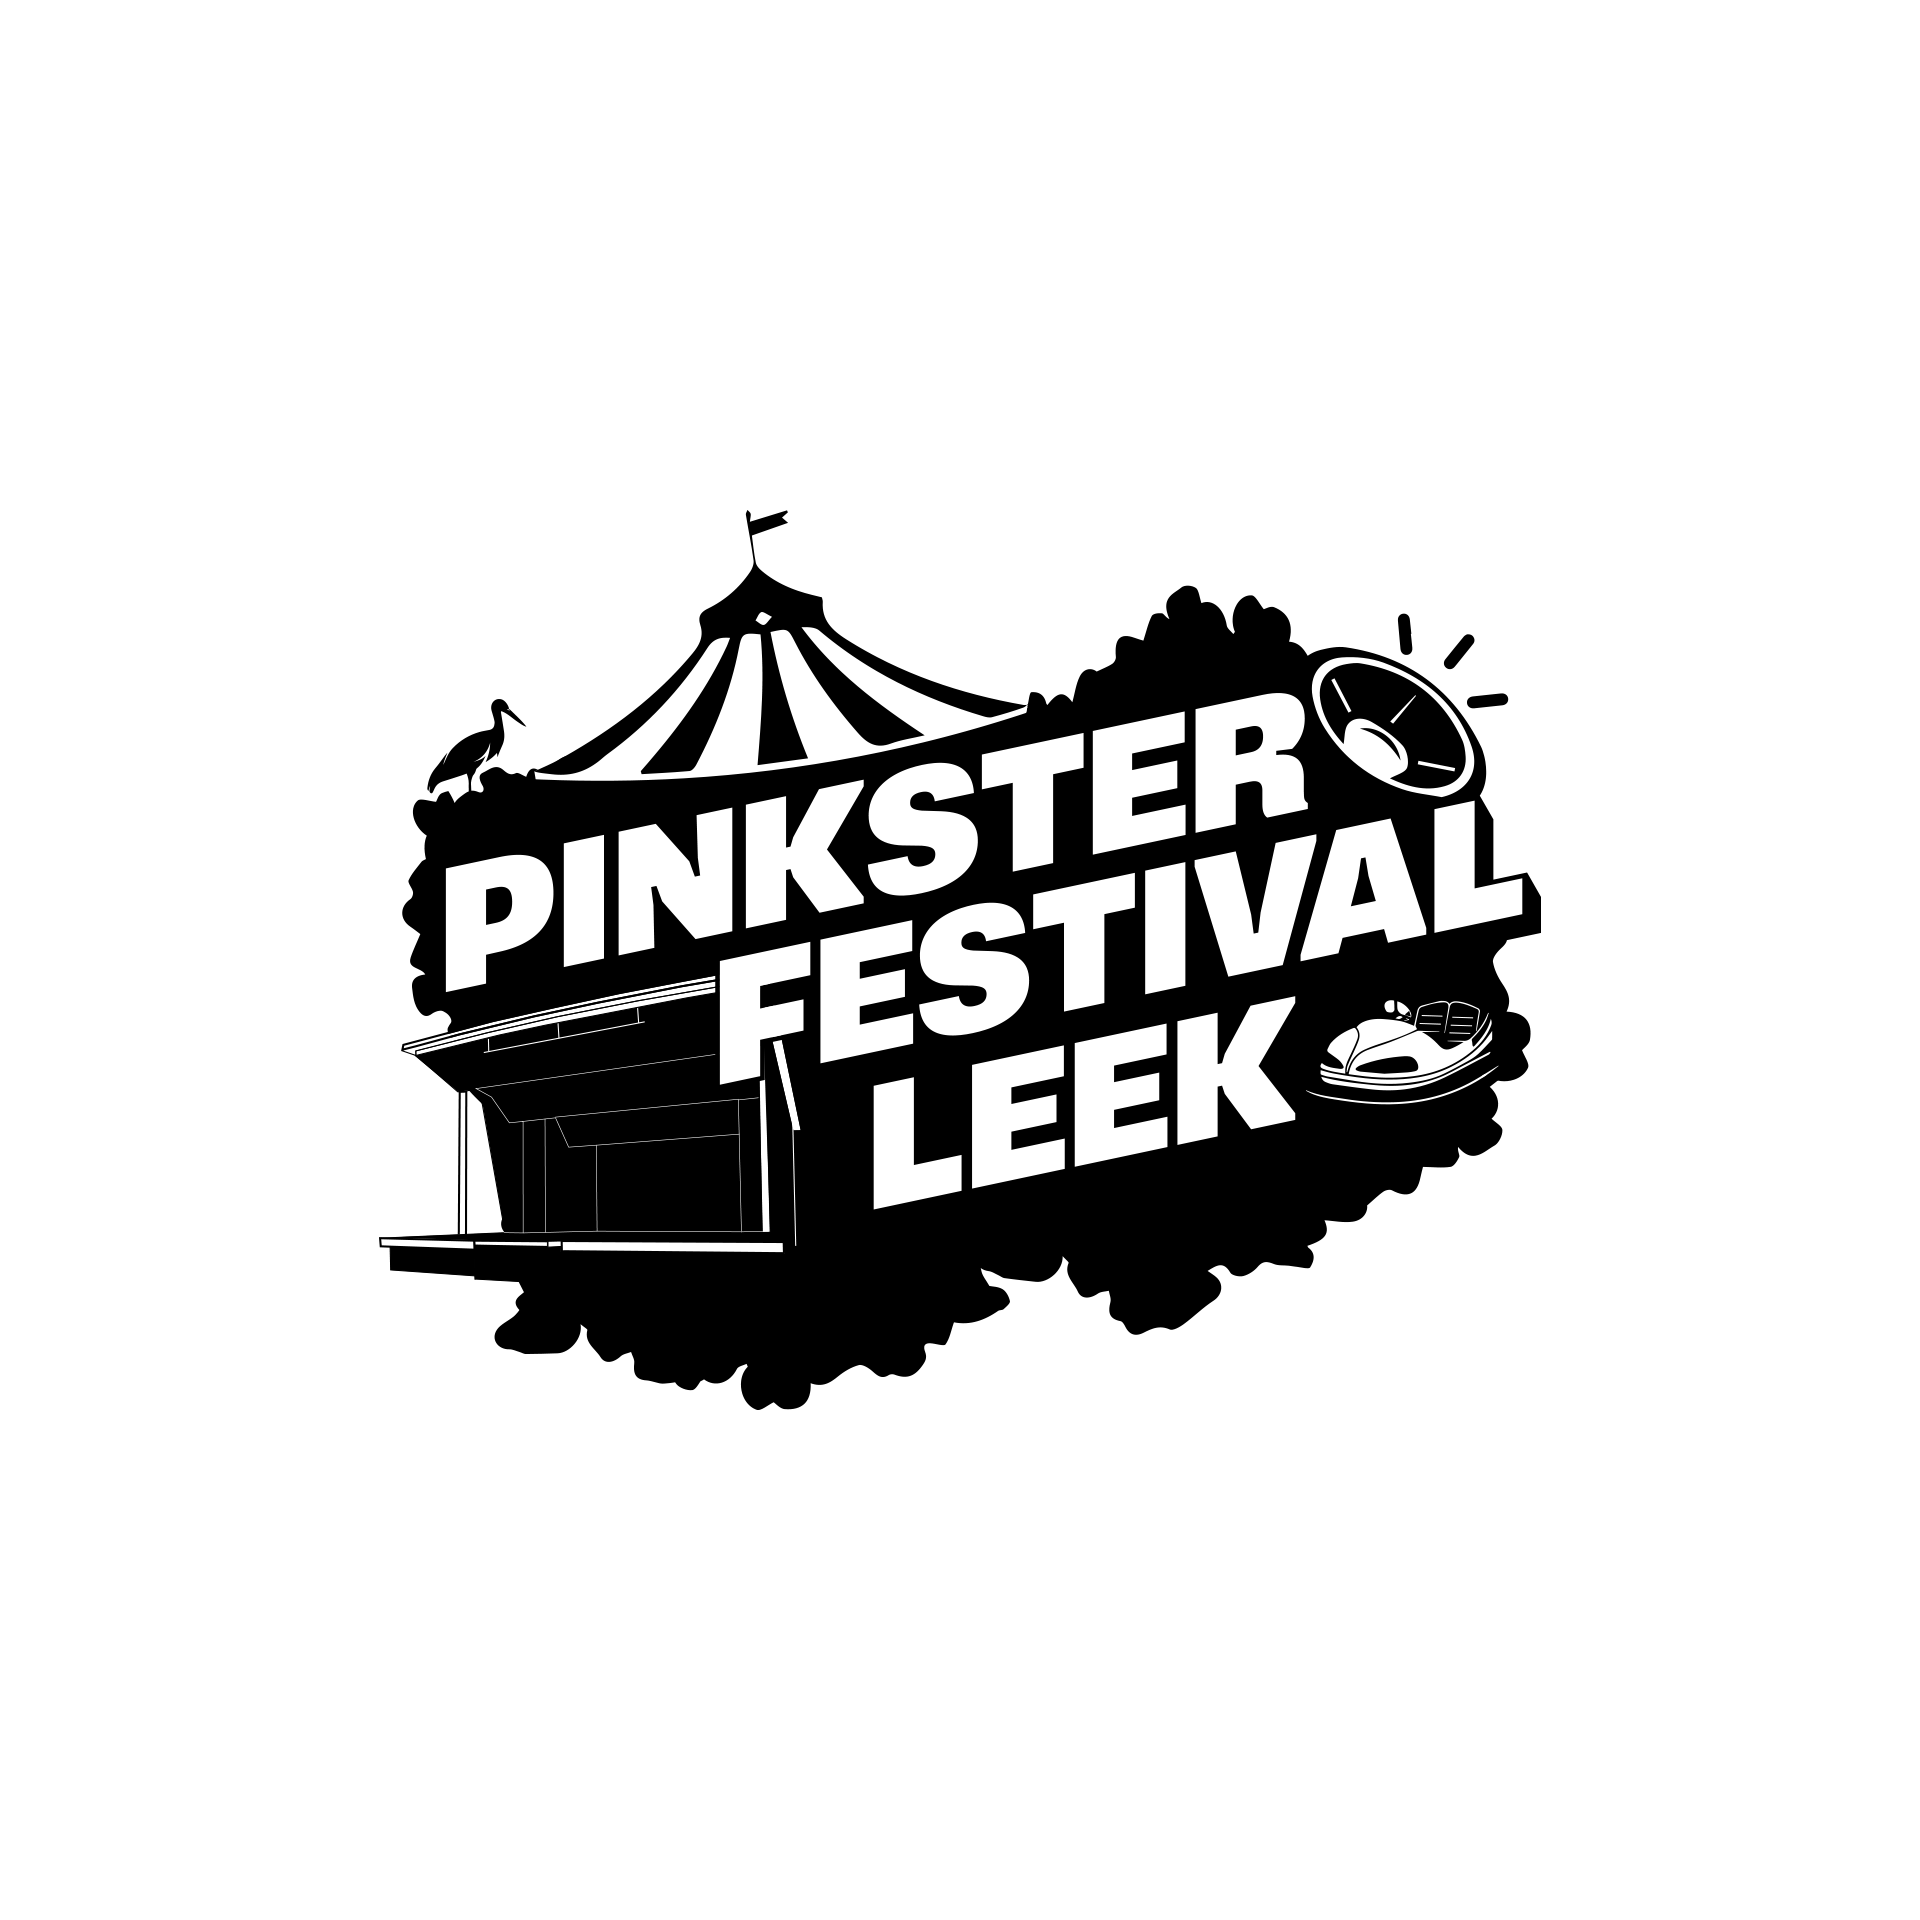 Pinsterfestival Leek logo